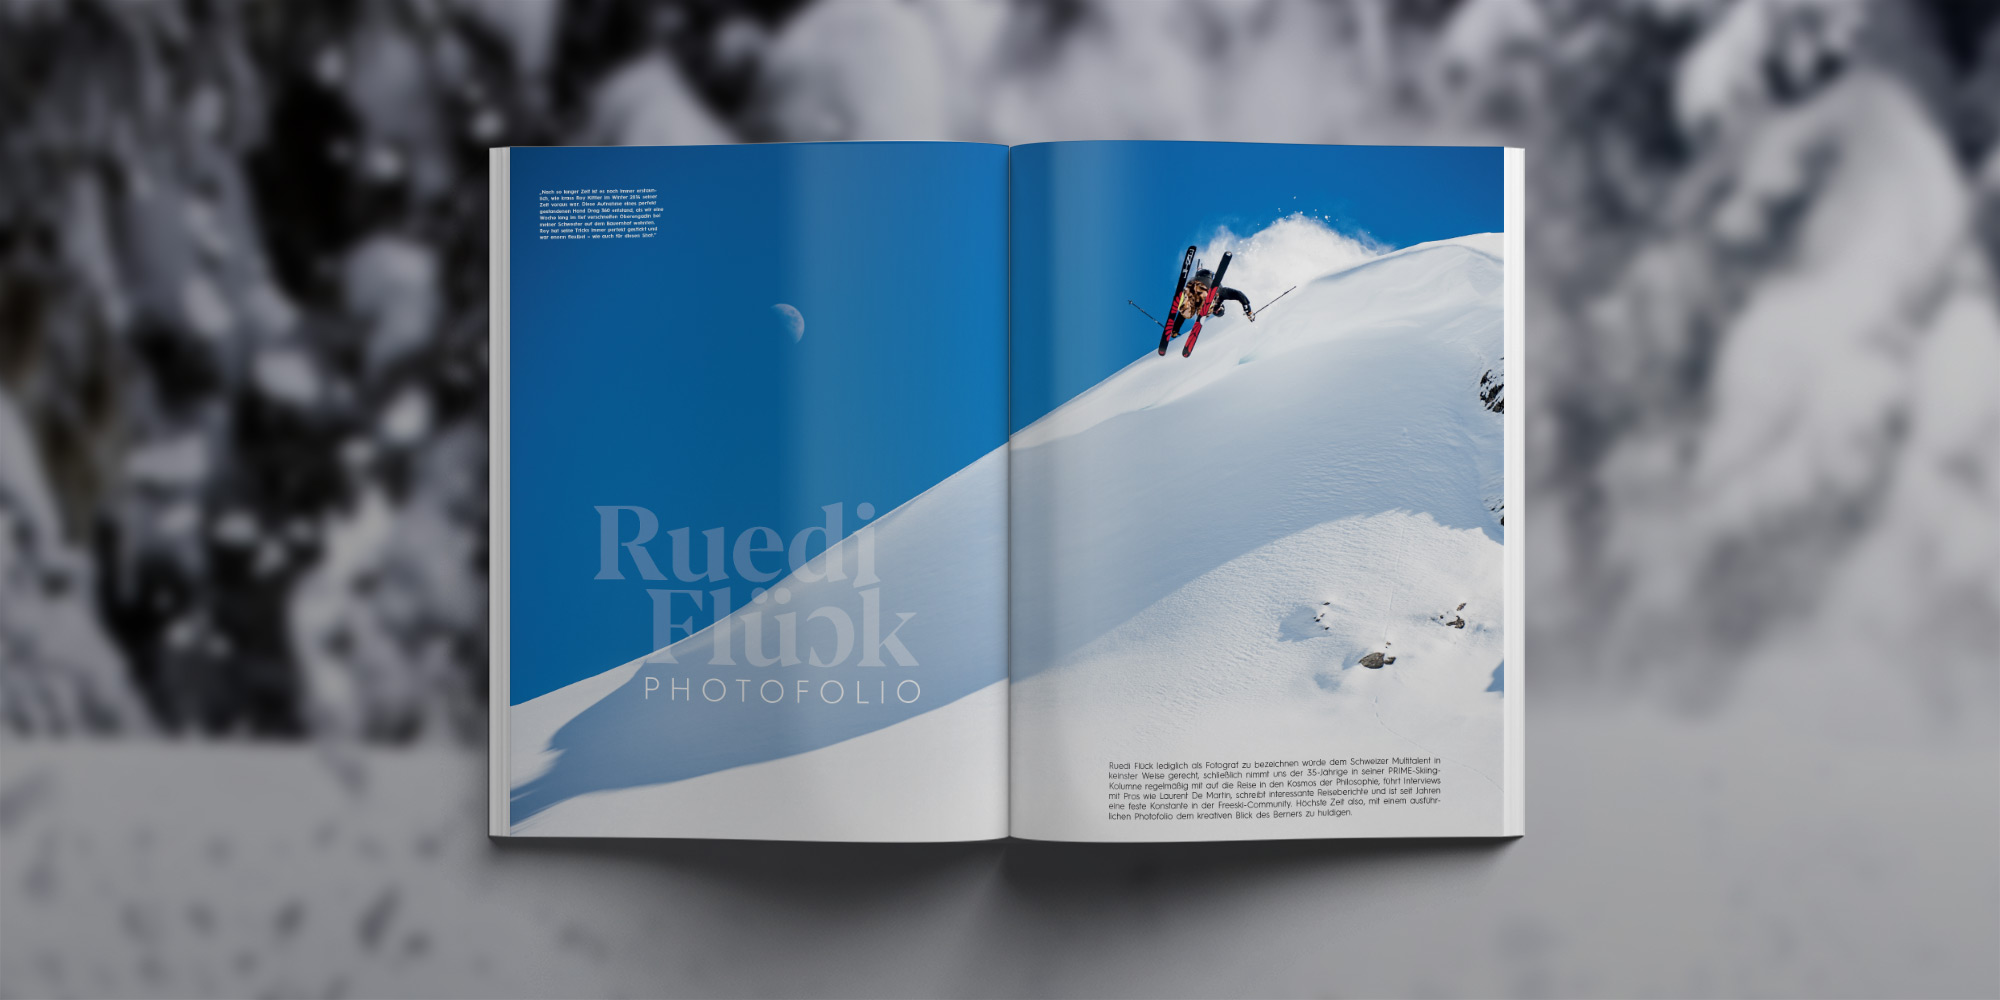 PRIME Skiing #31 - Artikel Highlights: Photofolio - Ruedi Flück